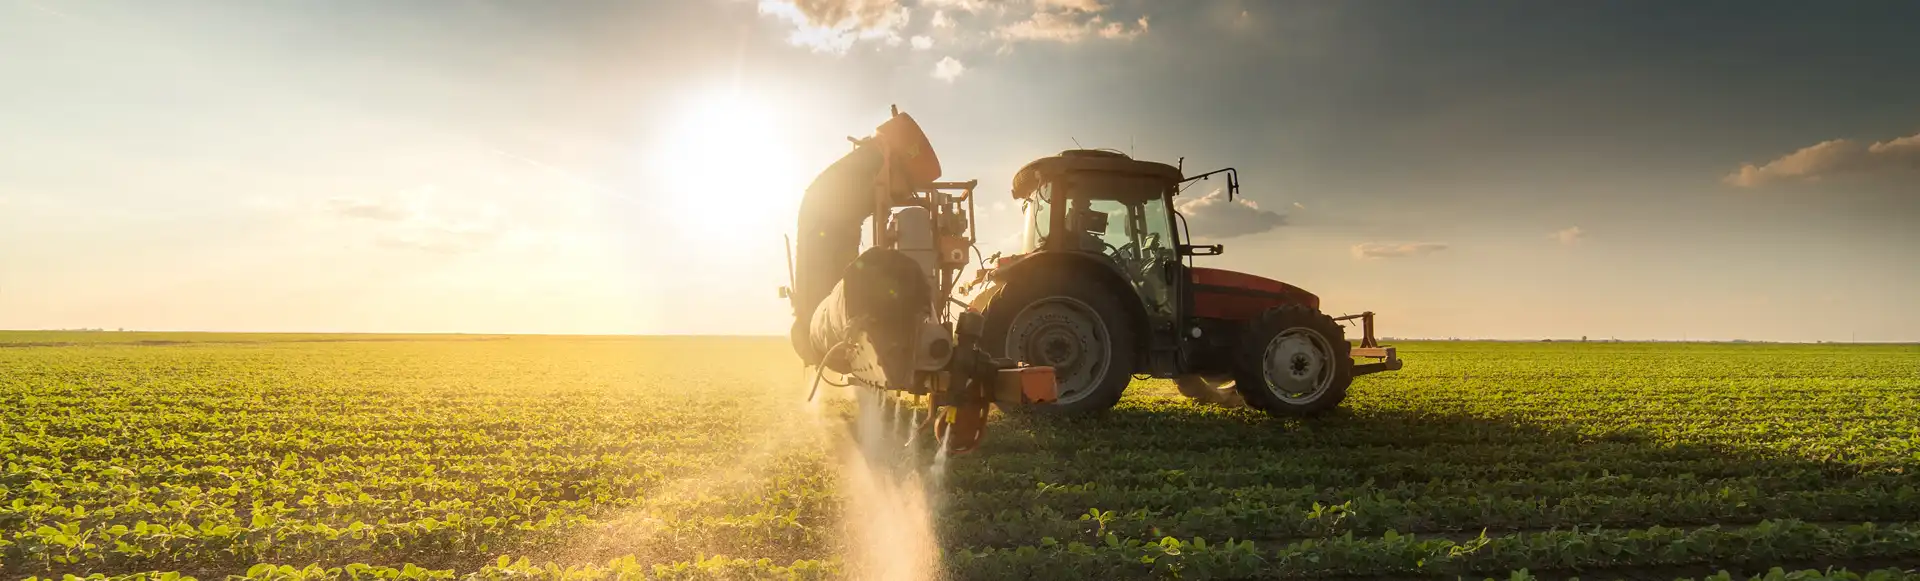 Tractor aplicando pesticidas